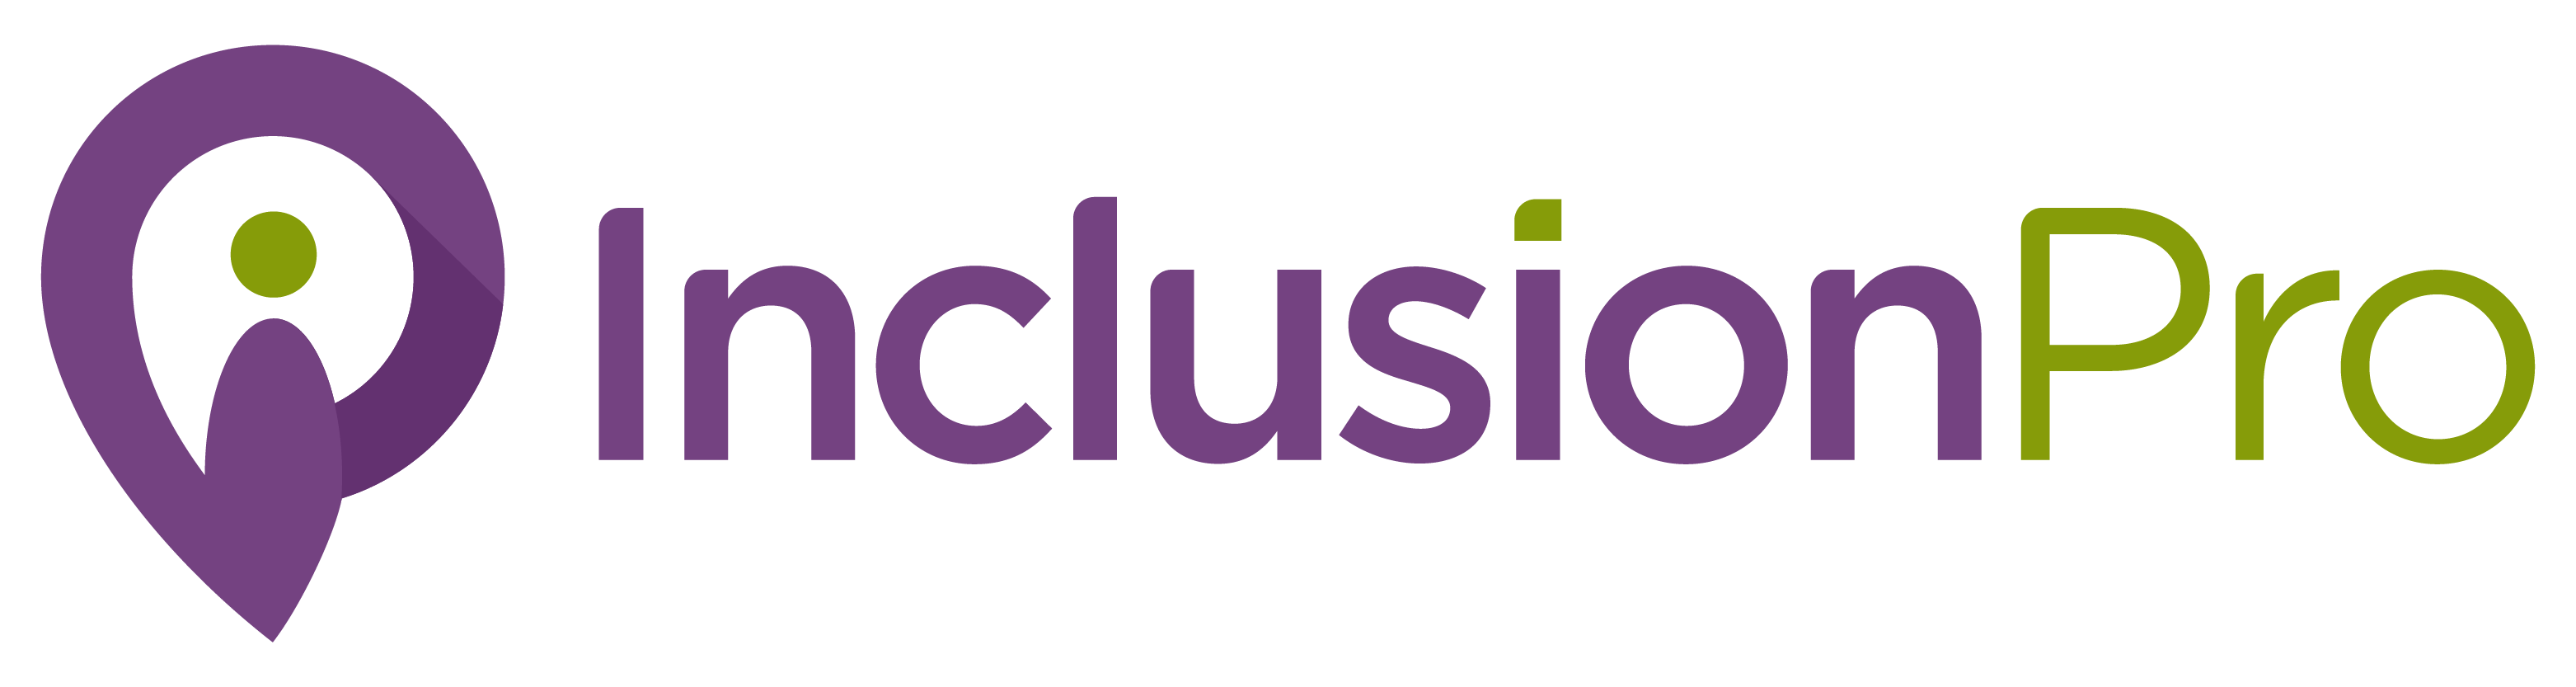 InclusionPro Logo